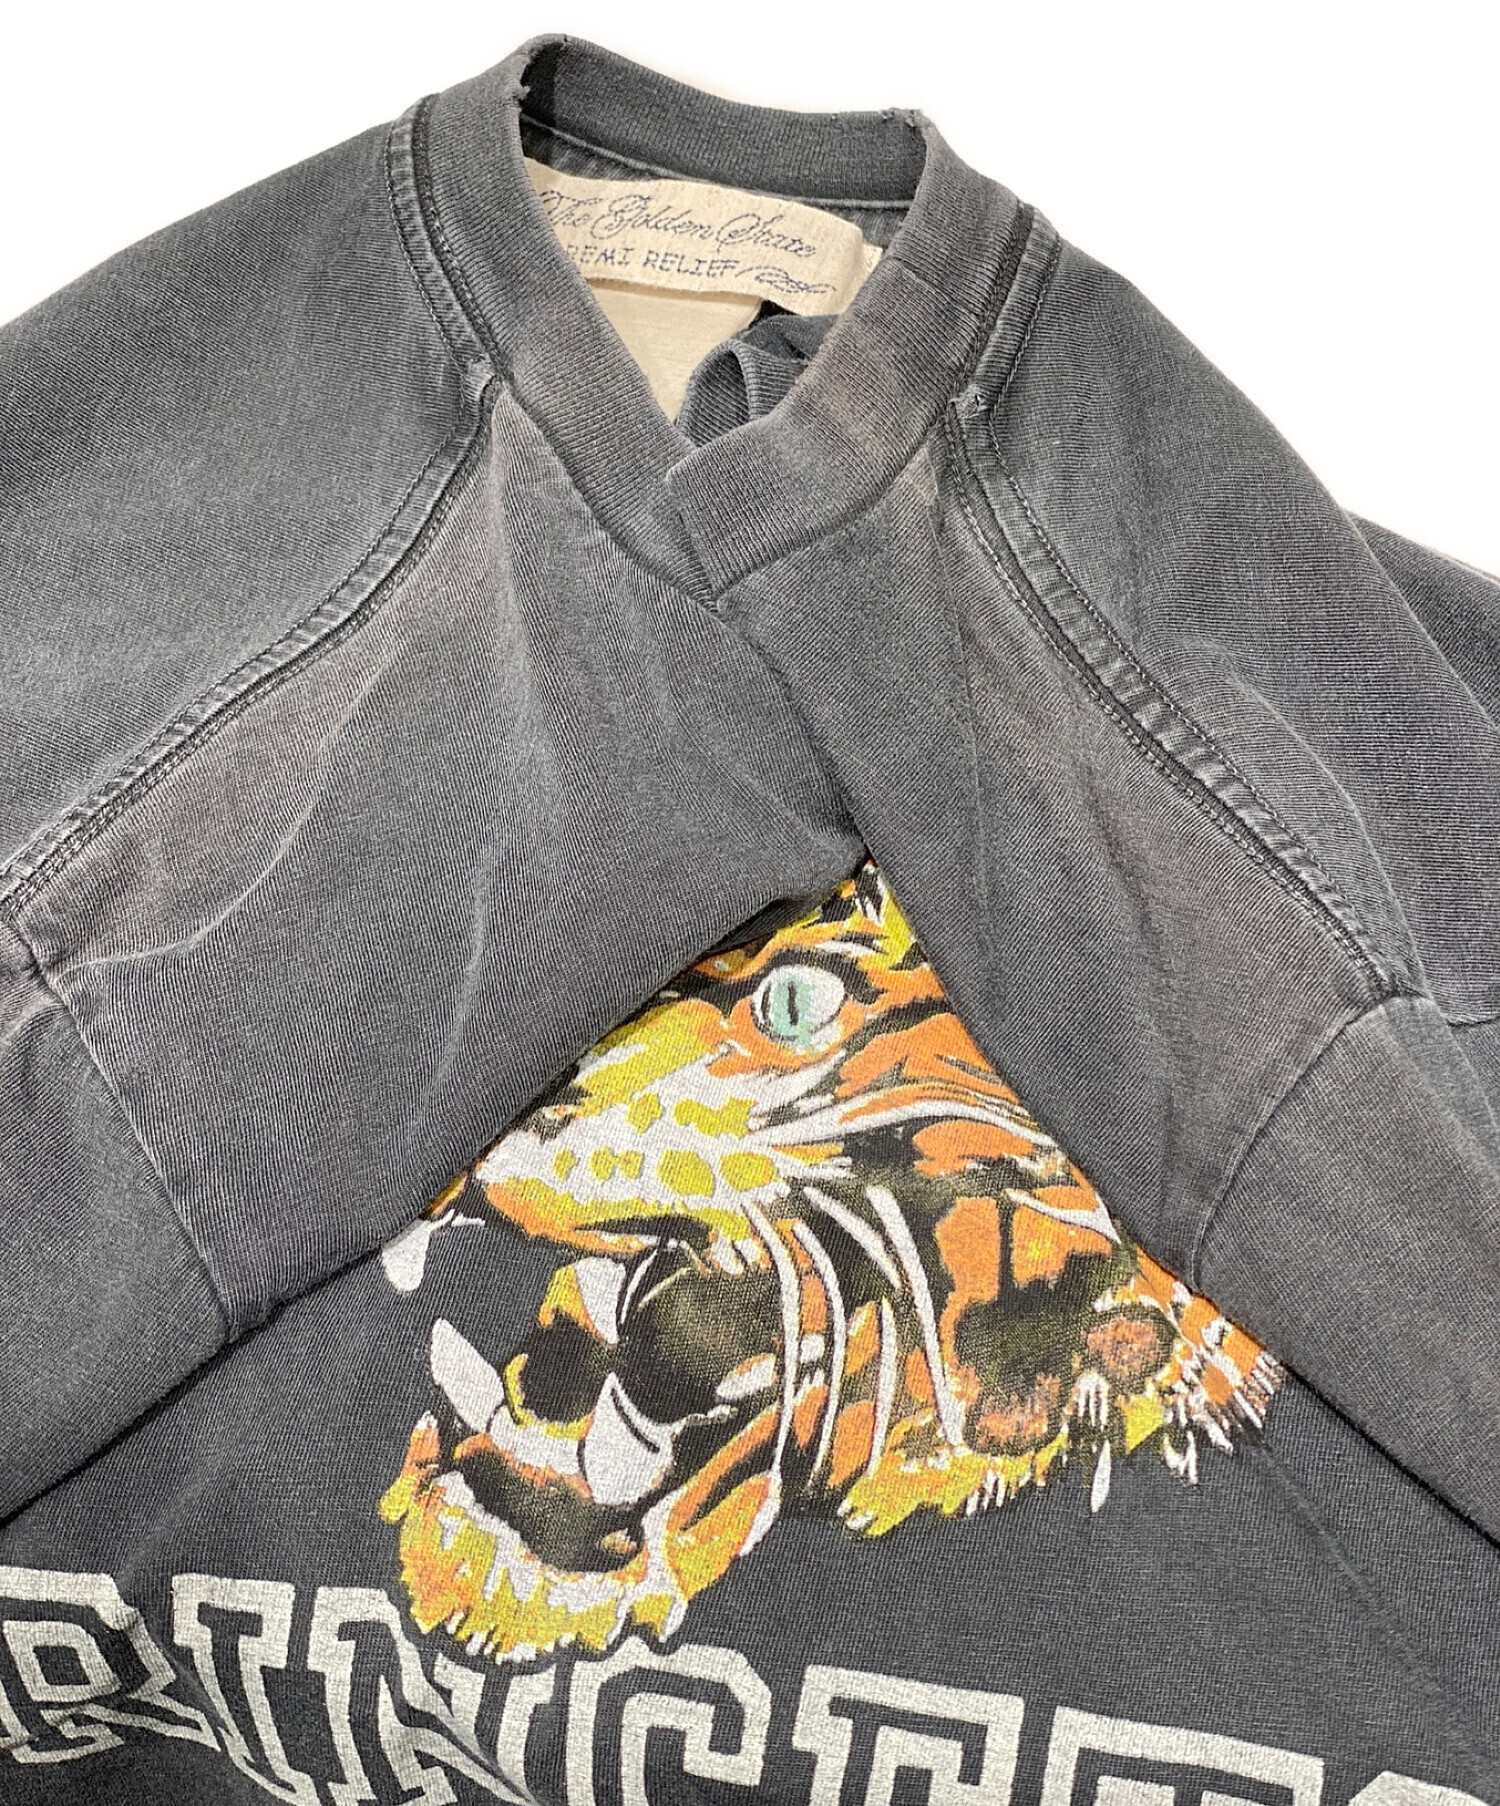 REMI RELIEF (レミレリーフ) TIGER Tシャツ チャコールグレー サイズ:L